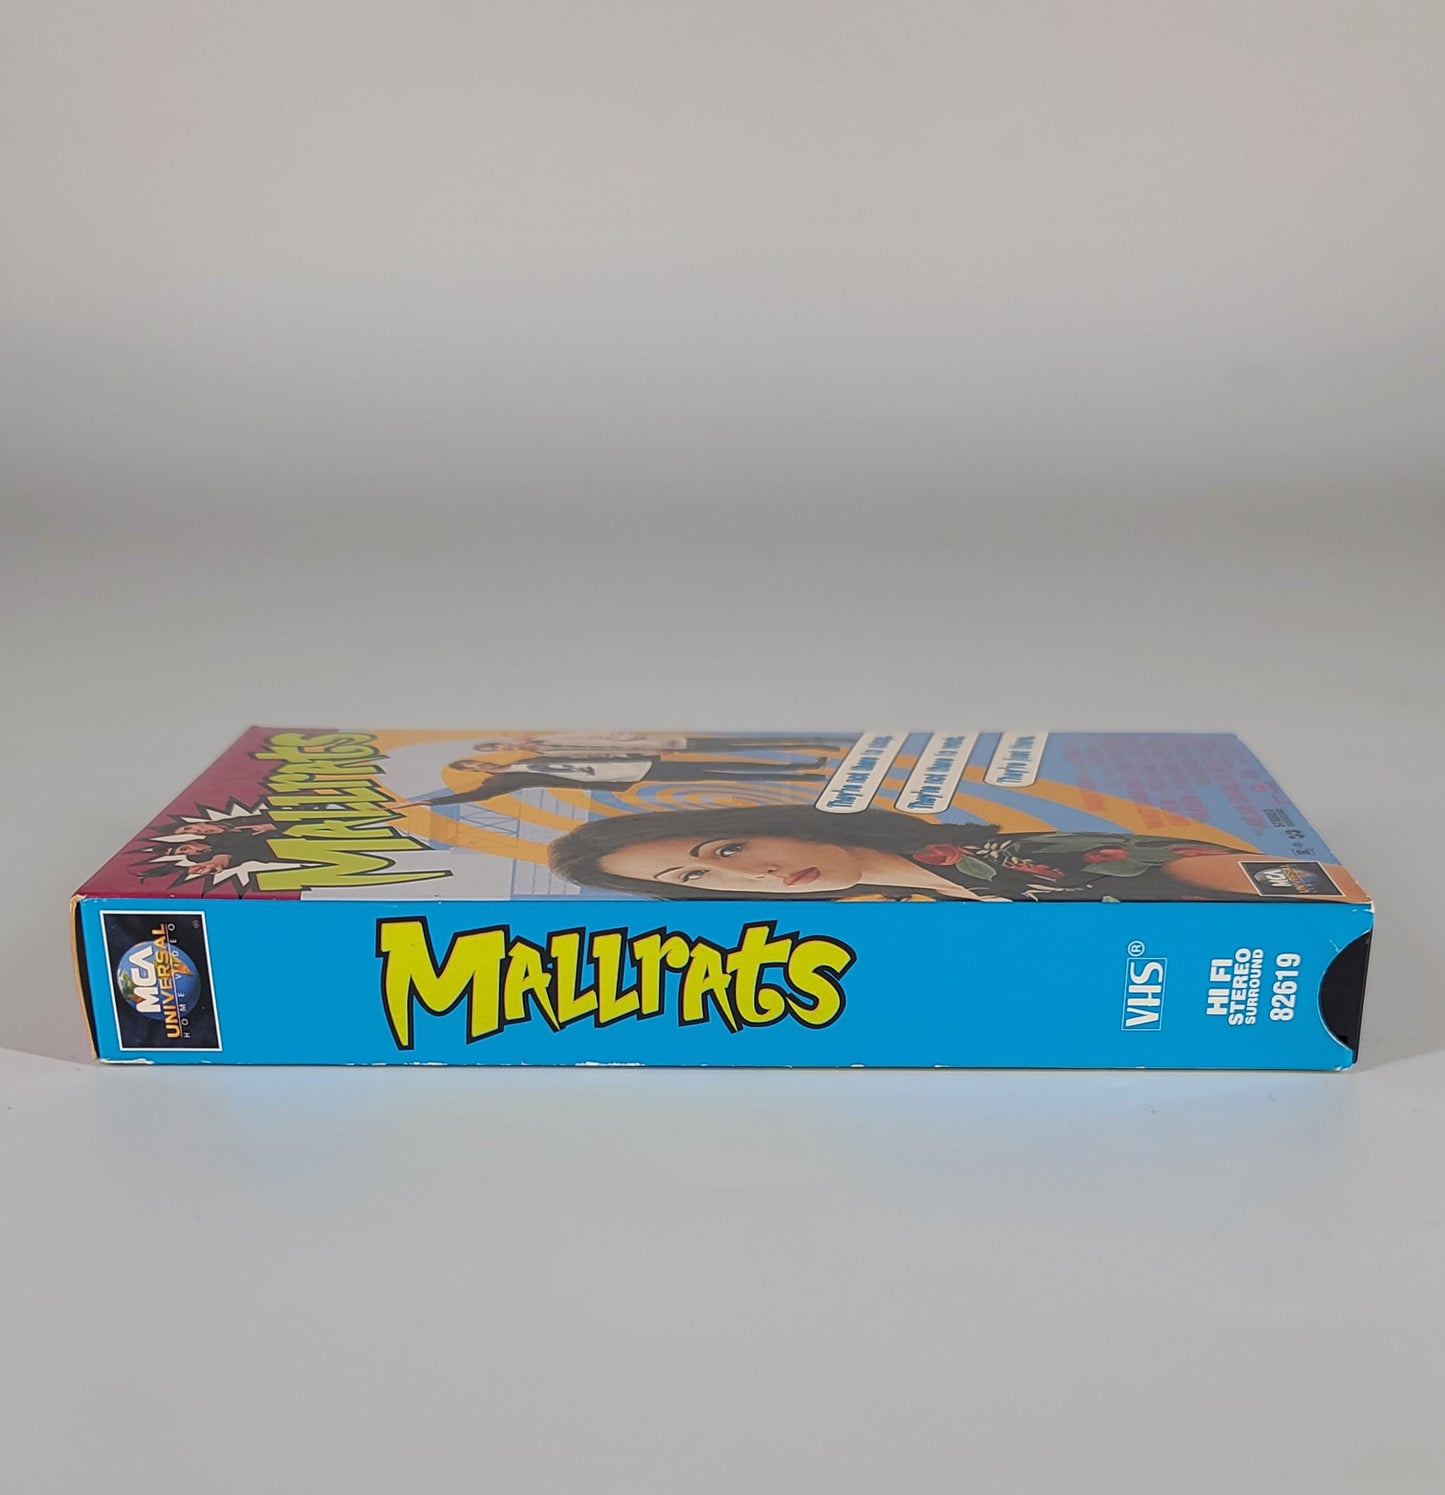 'Mallrats' VHS